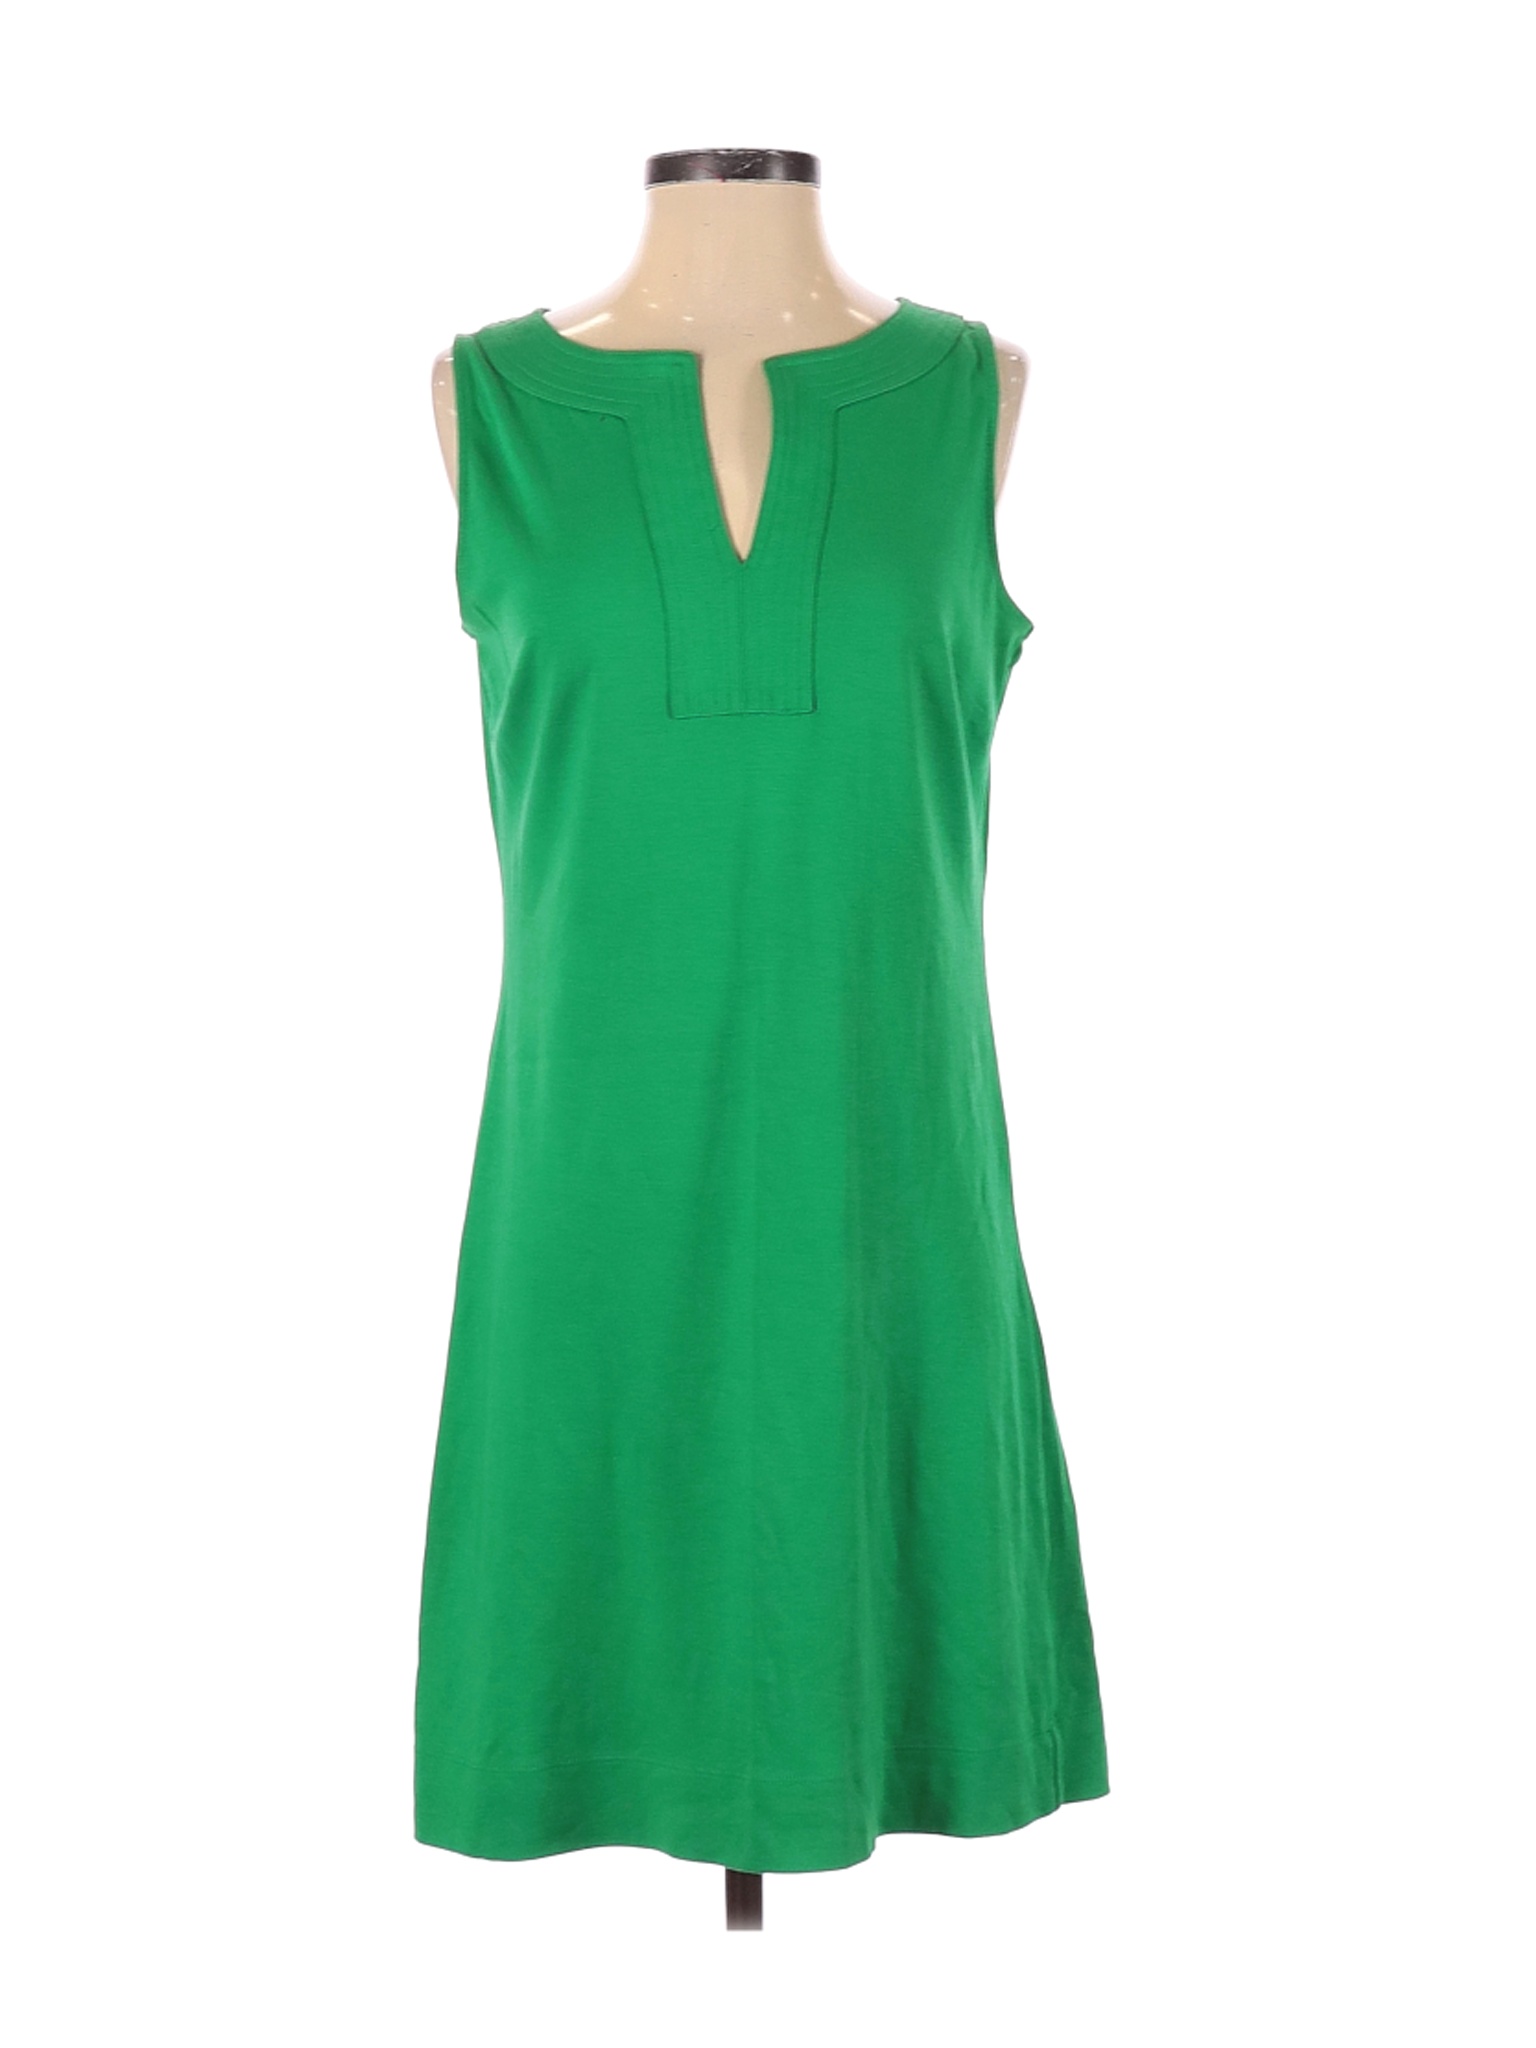 New York & Company Women Green Casual Dress S | eBay